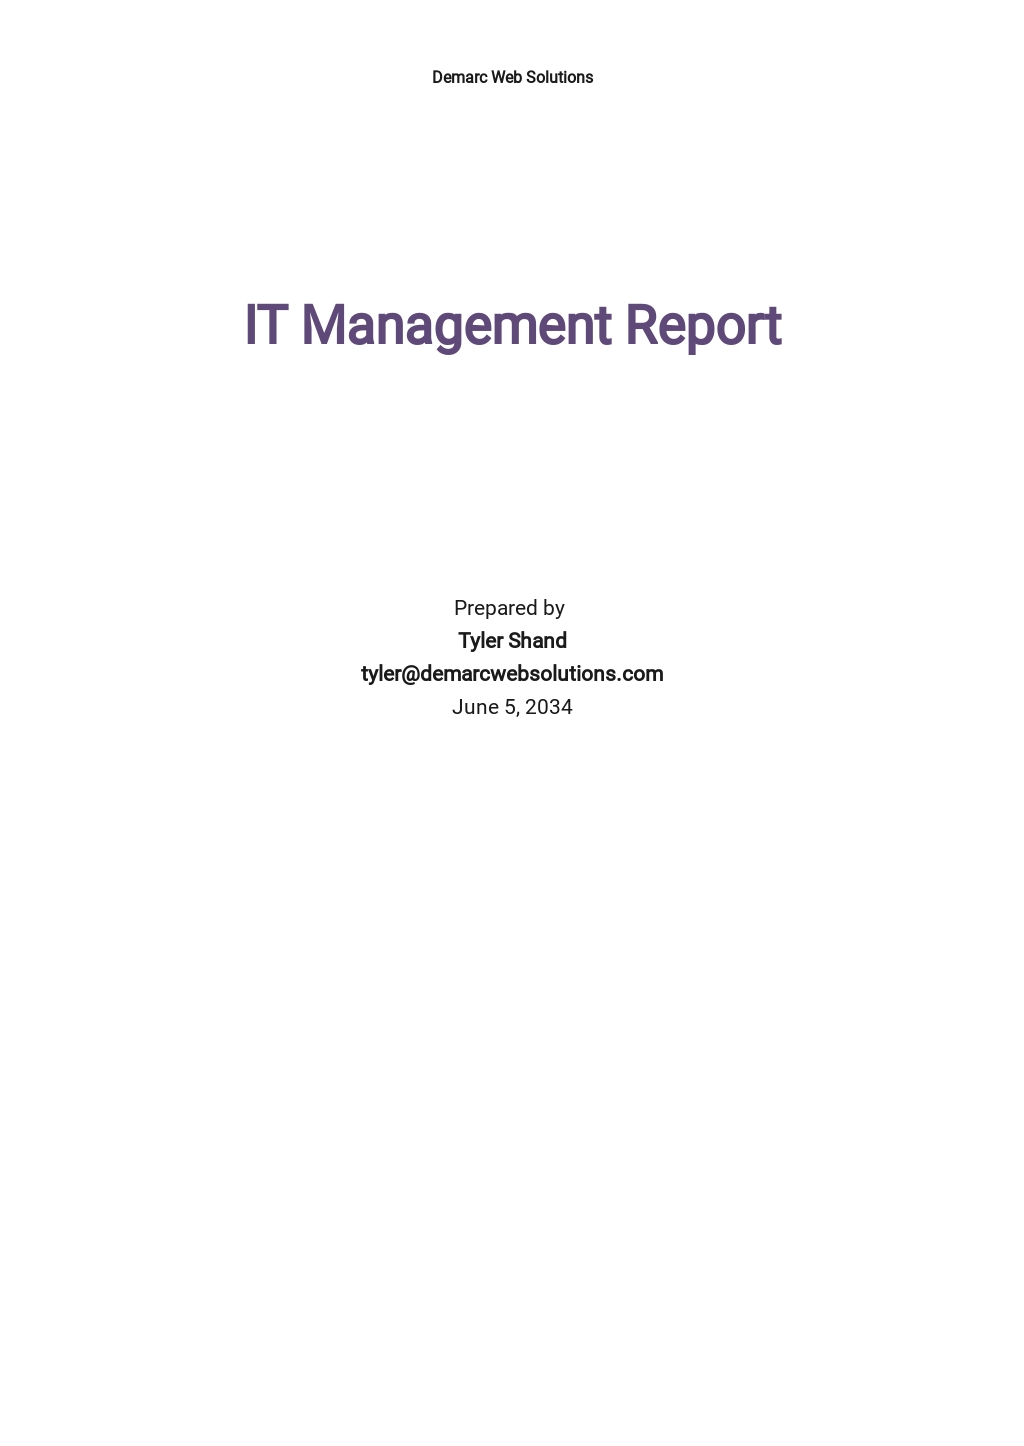 IT Management Report Template - Google Docs, Word  Template.net Within It Management Report Template